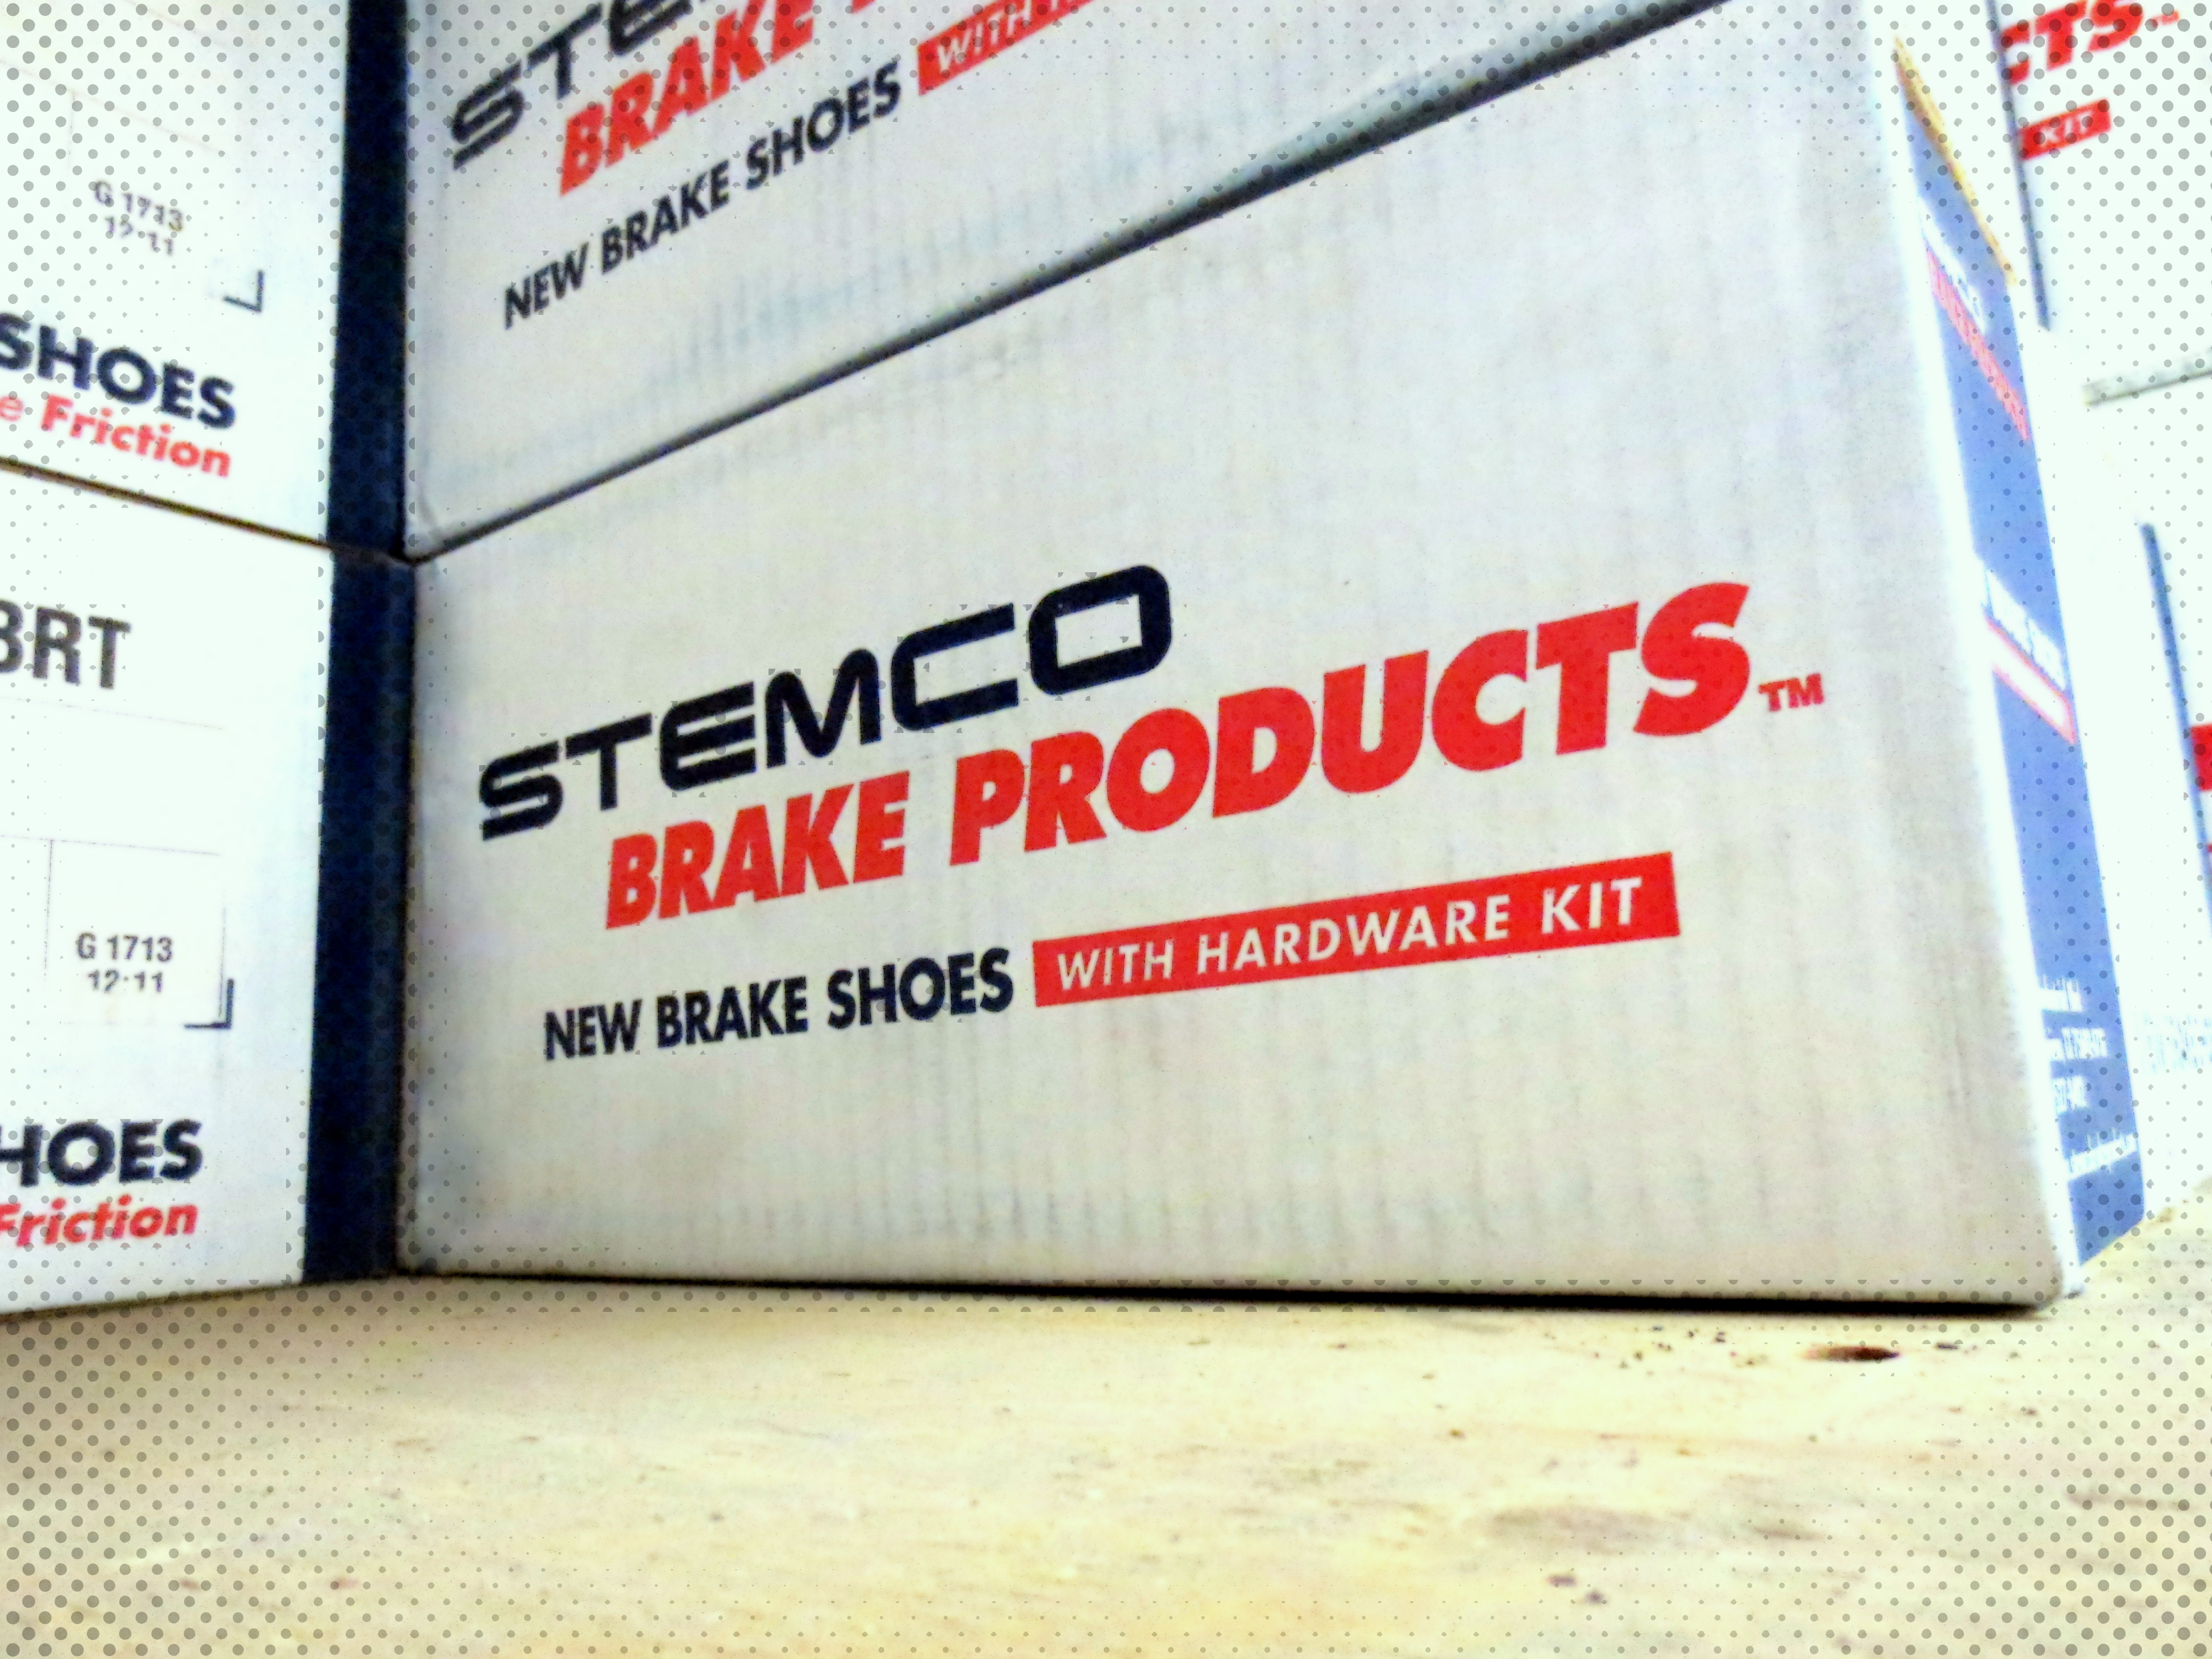 Stemco Brake Products